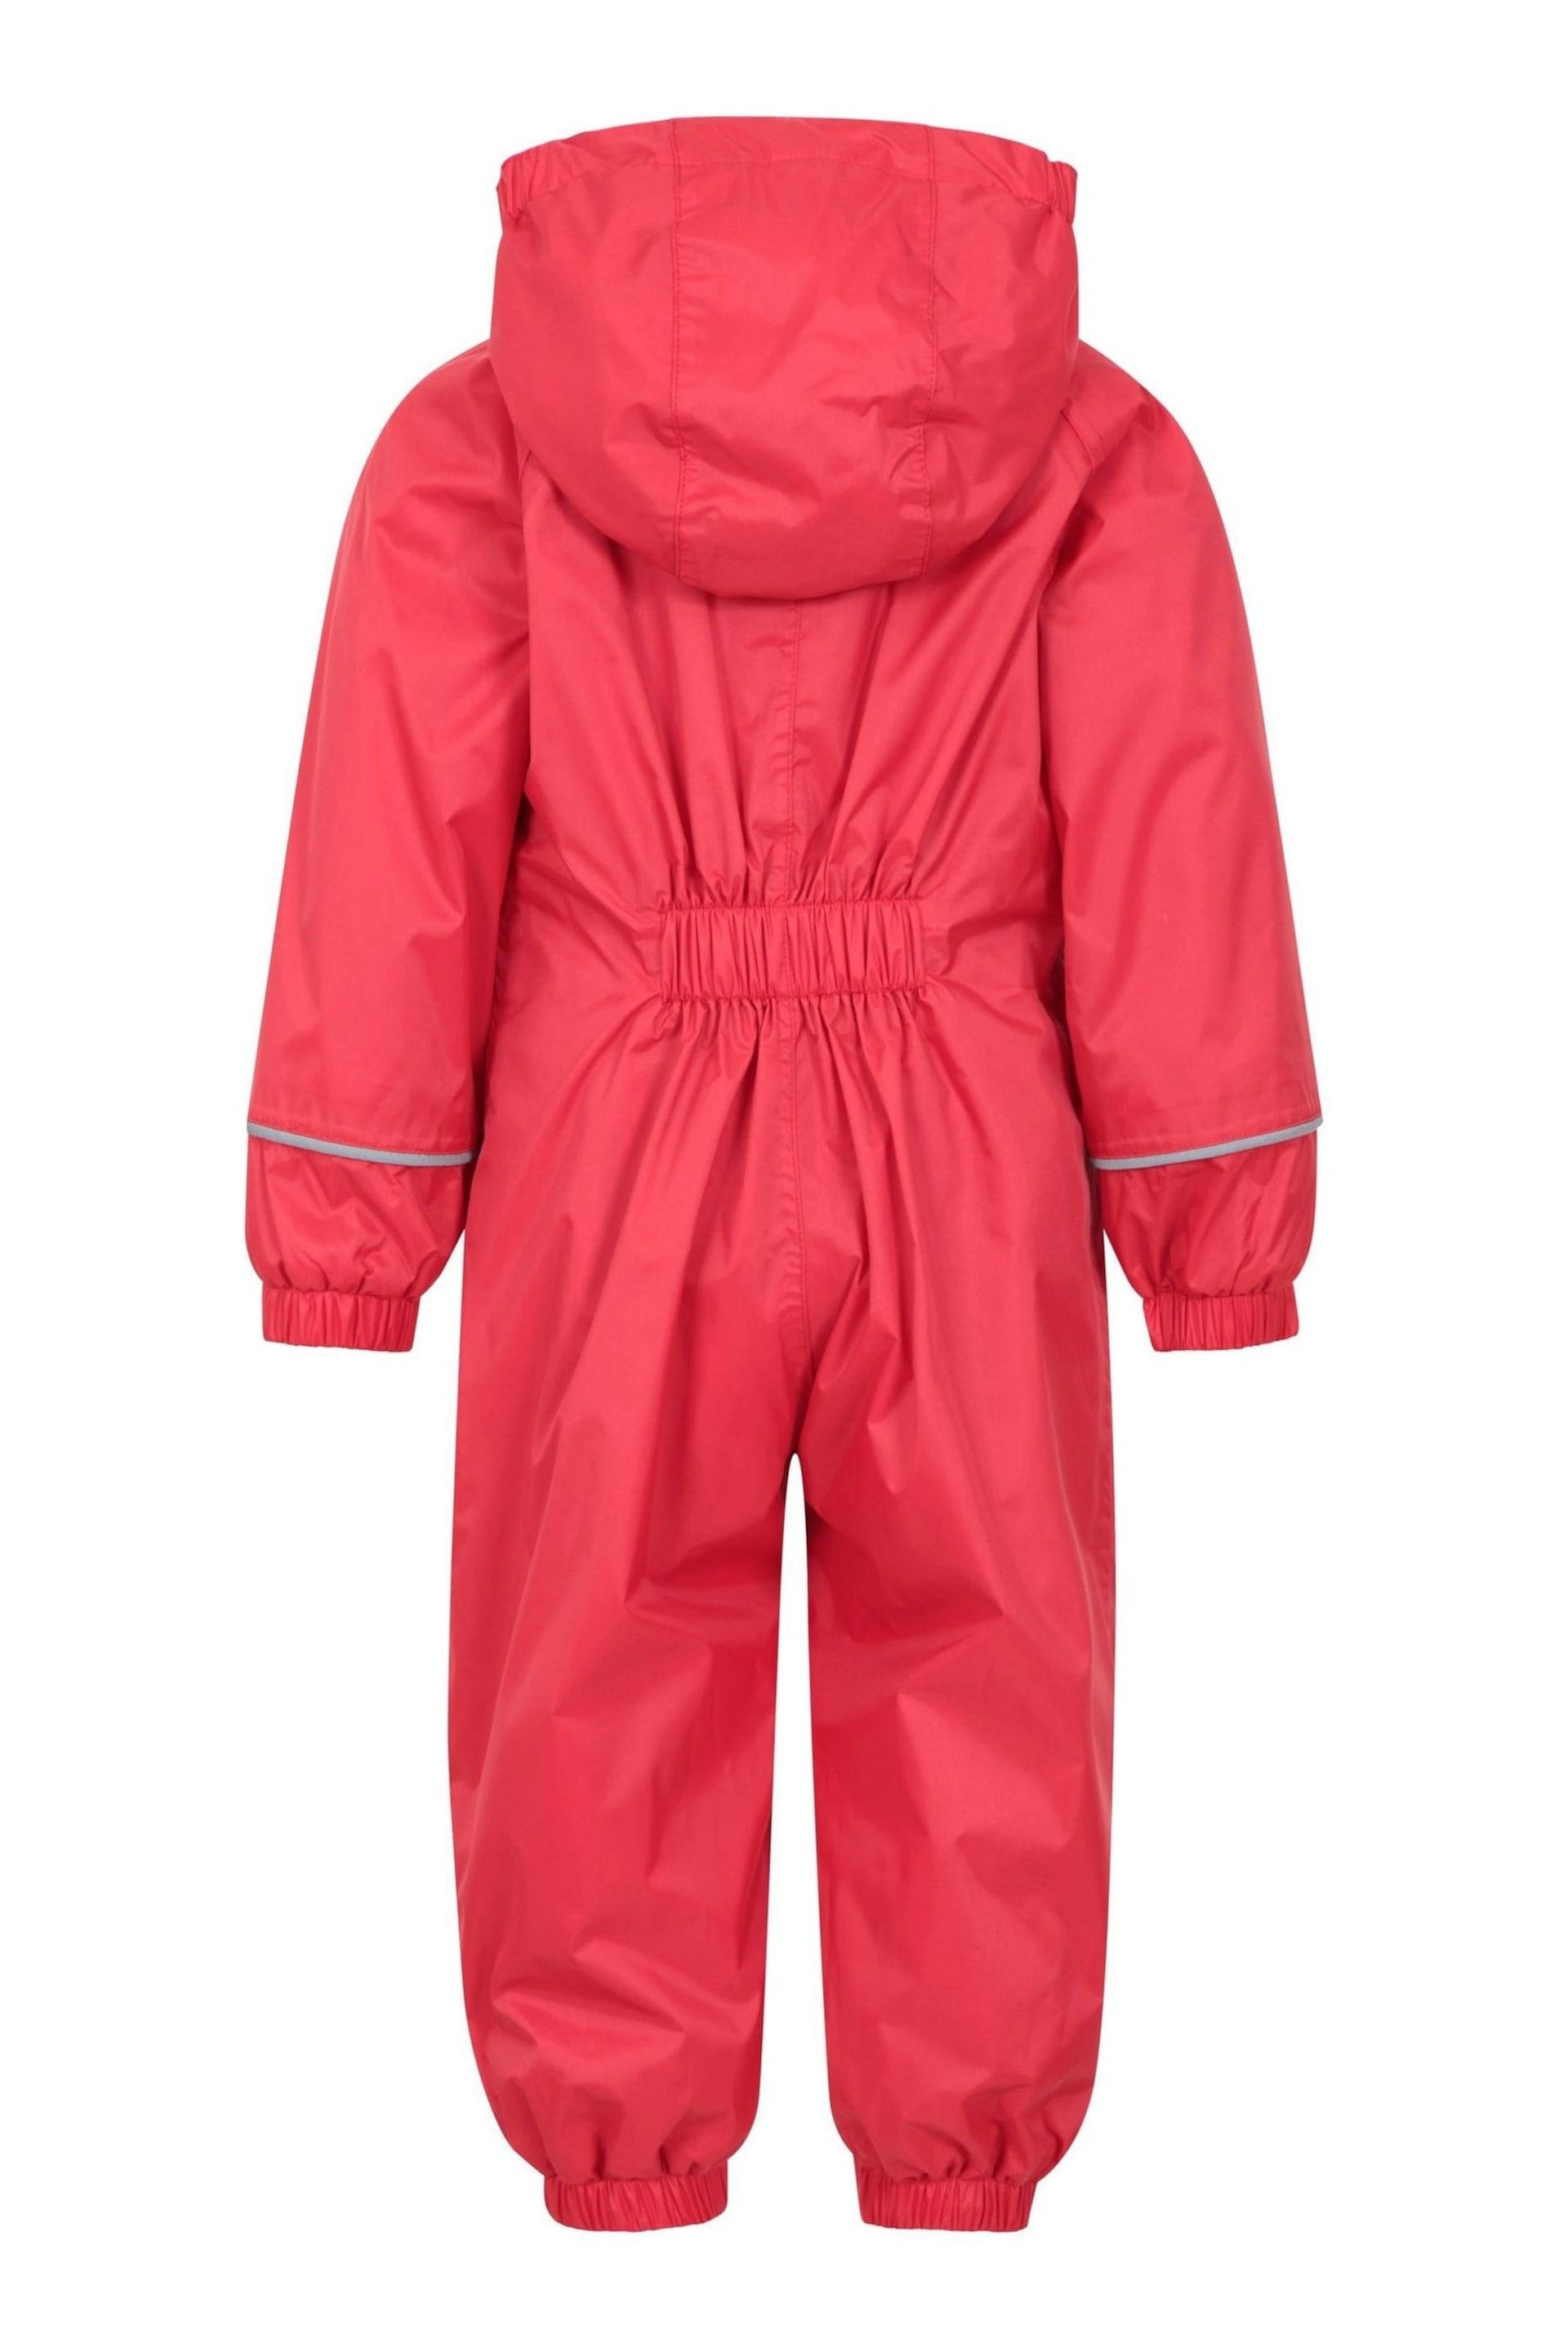 Mountain Warehouse Red Junior Spright Waterproof Fleece Lined Rainsuit - Image 3 of 5